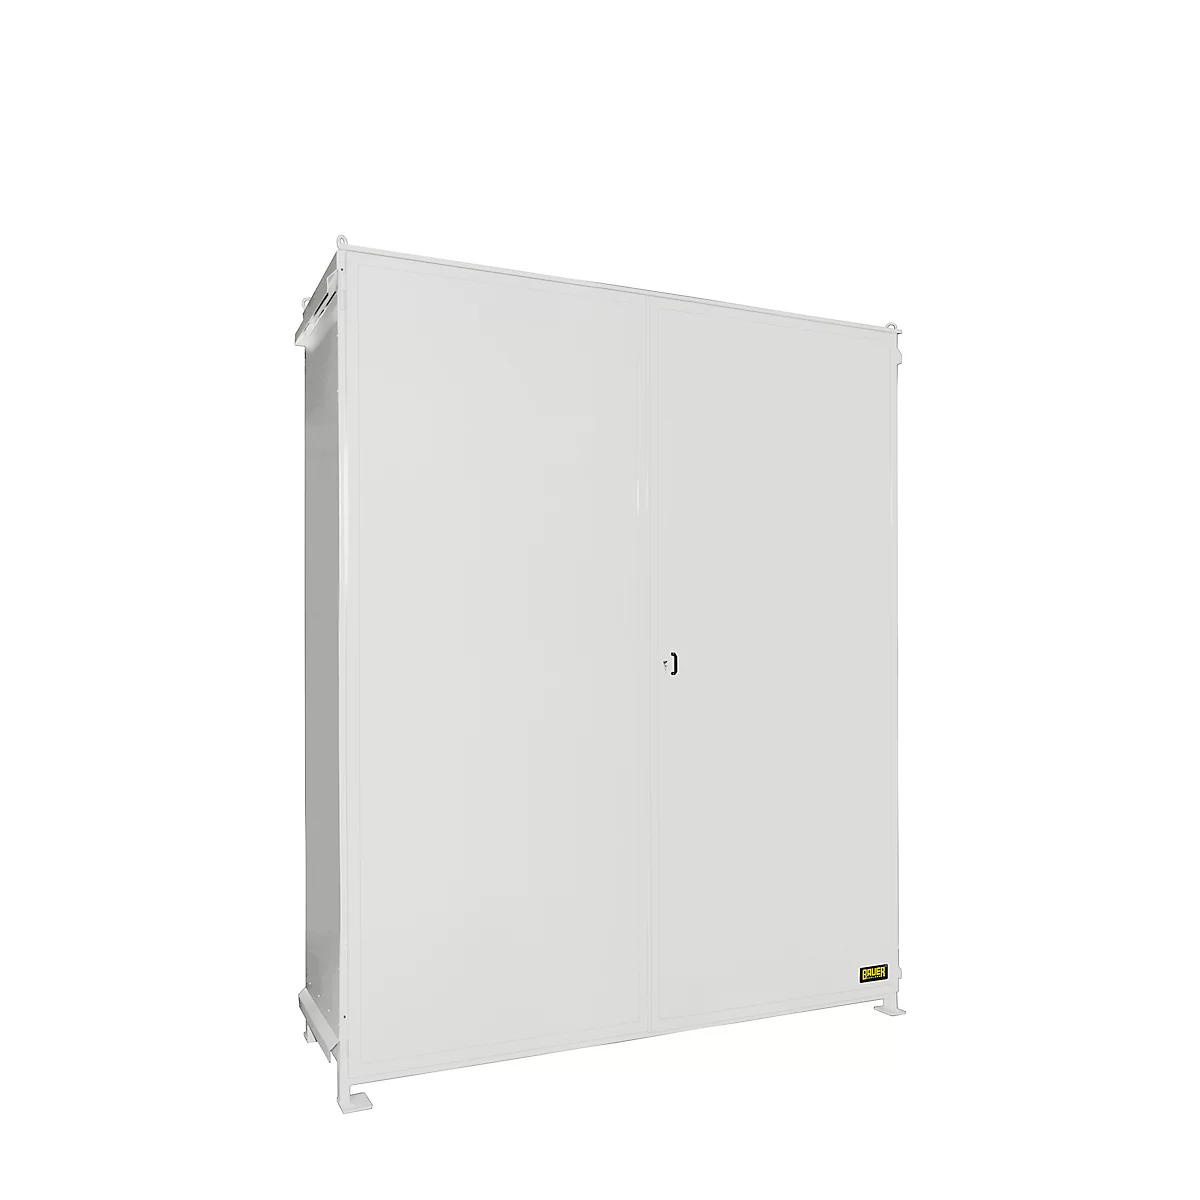 Contenedor de estantes BAUER CEN 36-3, acero, puerta doble, ancho 4195 x fondo 1585 x alto 4535 mm, blanco